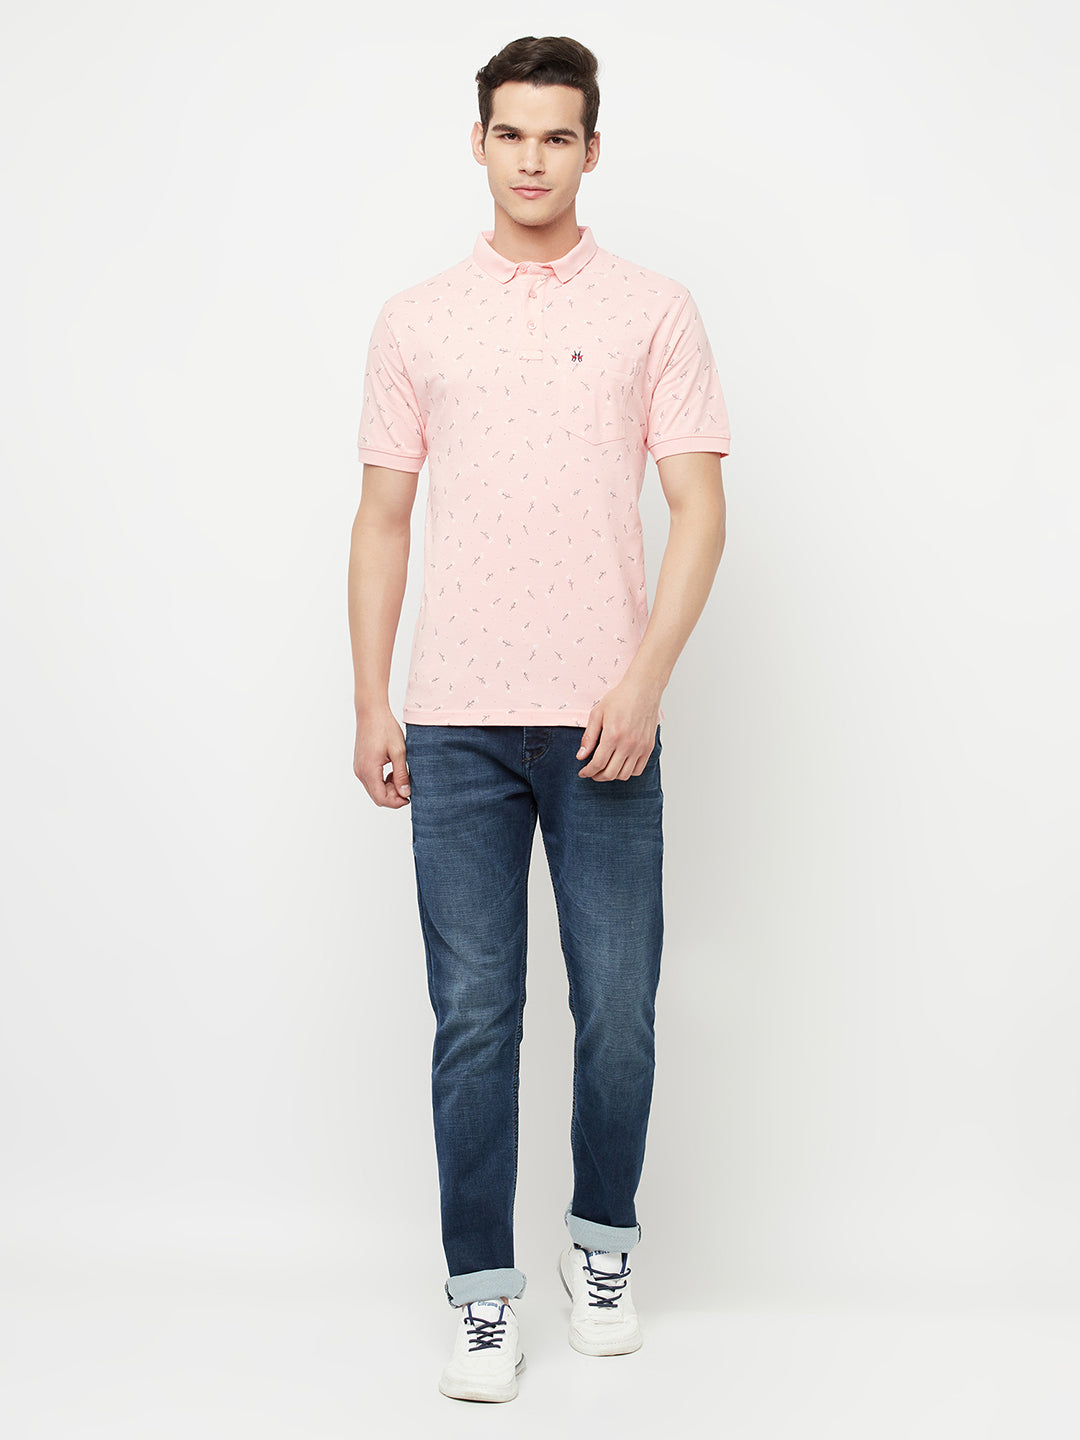 Pink Floral Printed Polo T-Shirt - Men T-Shirts